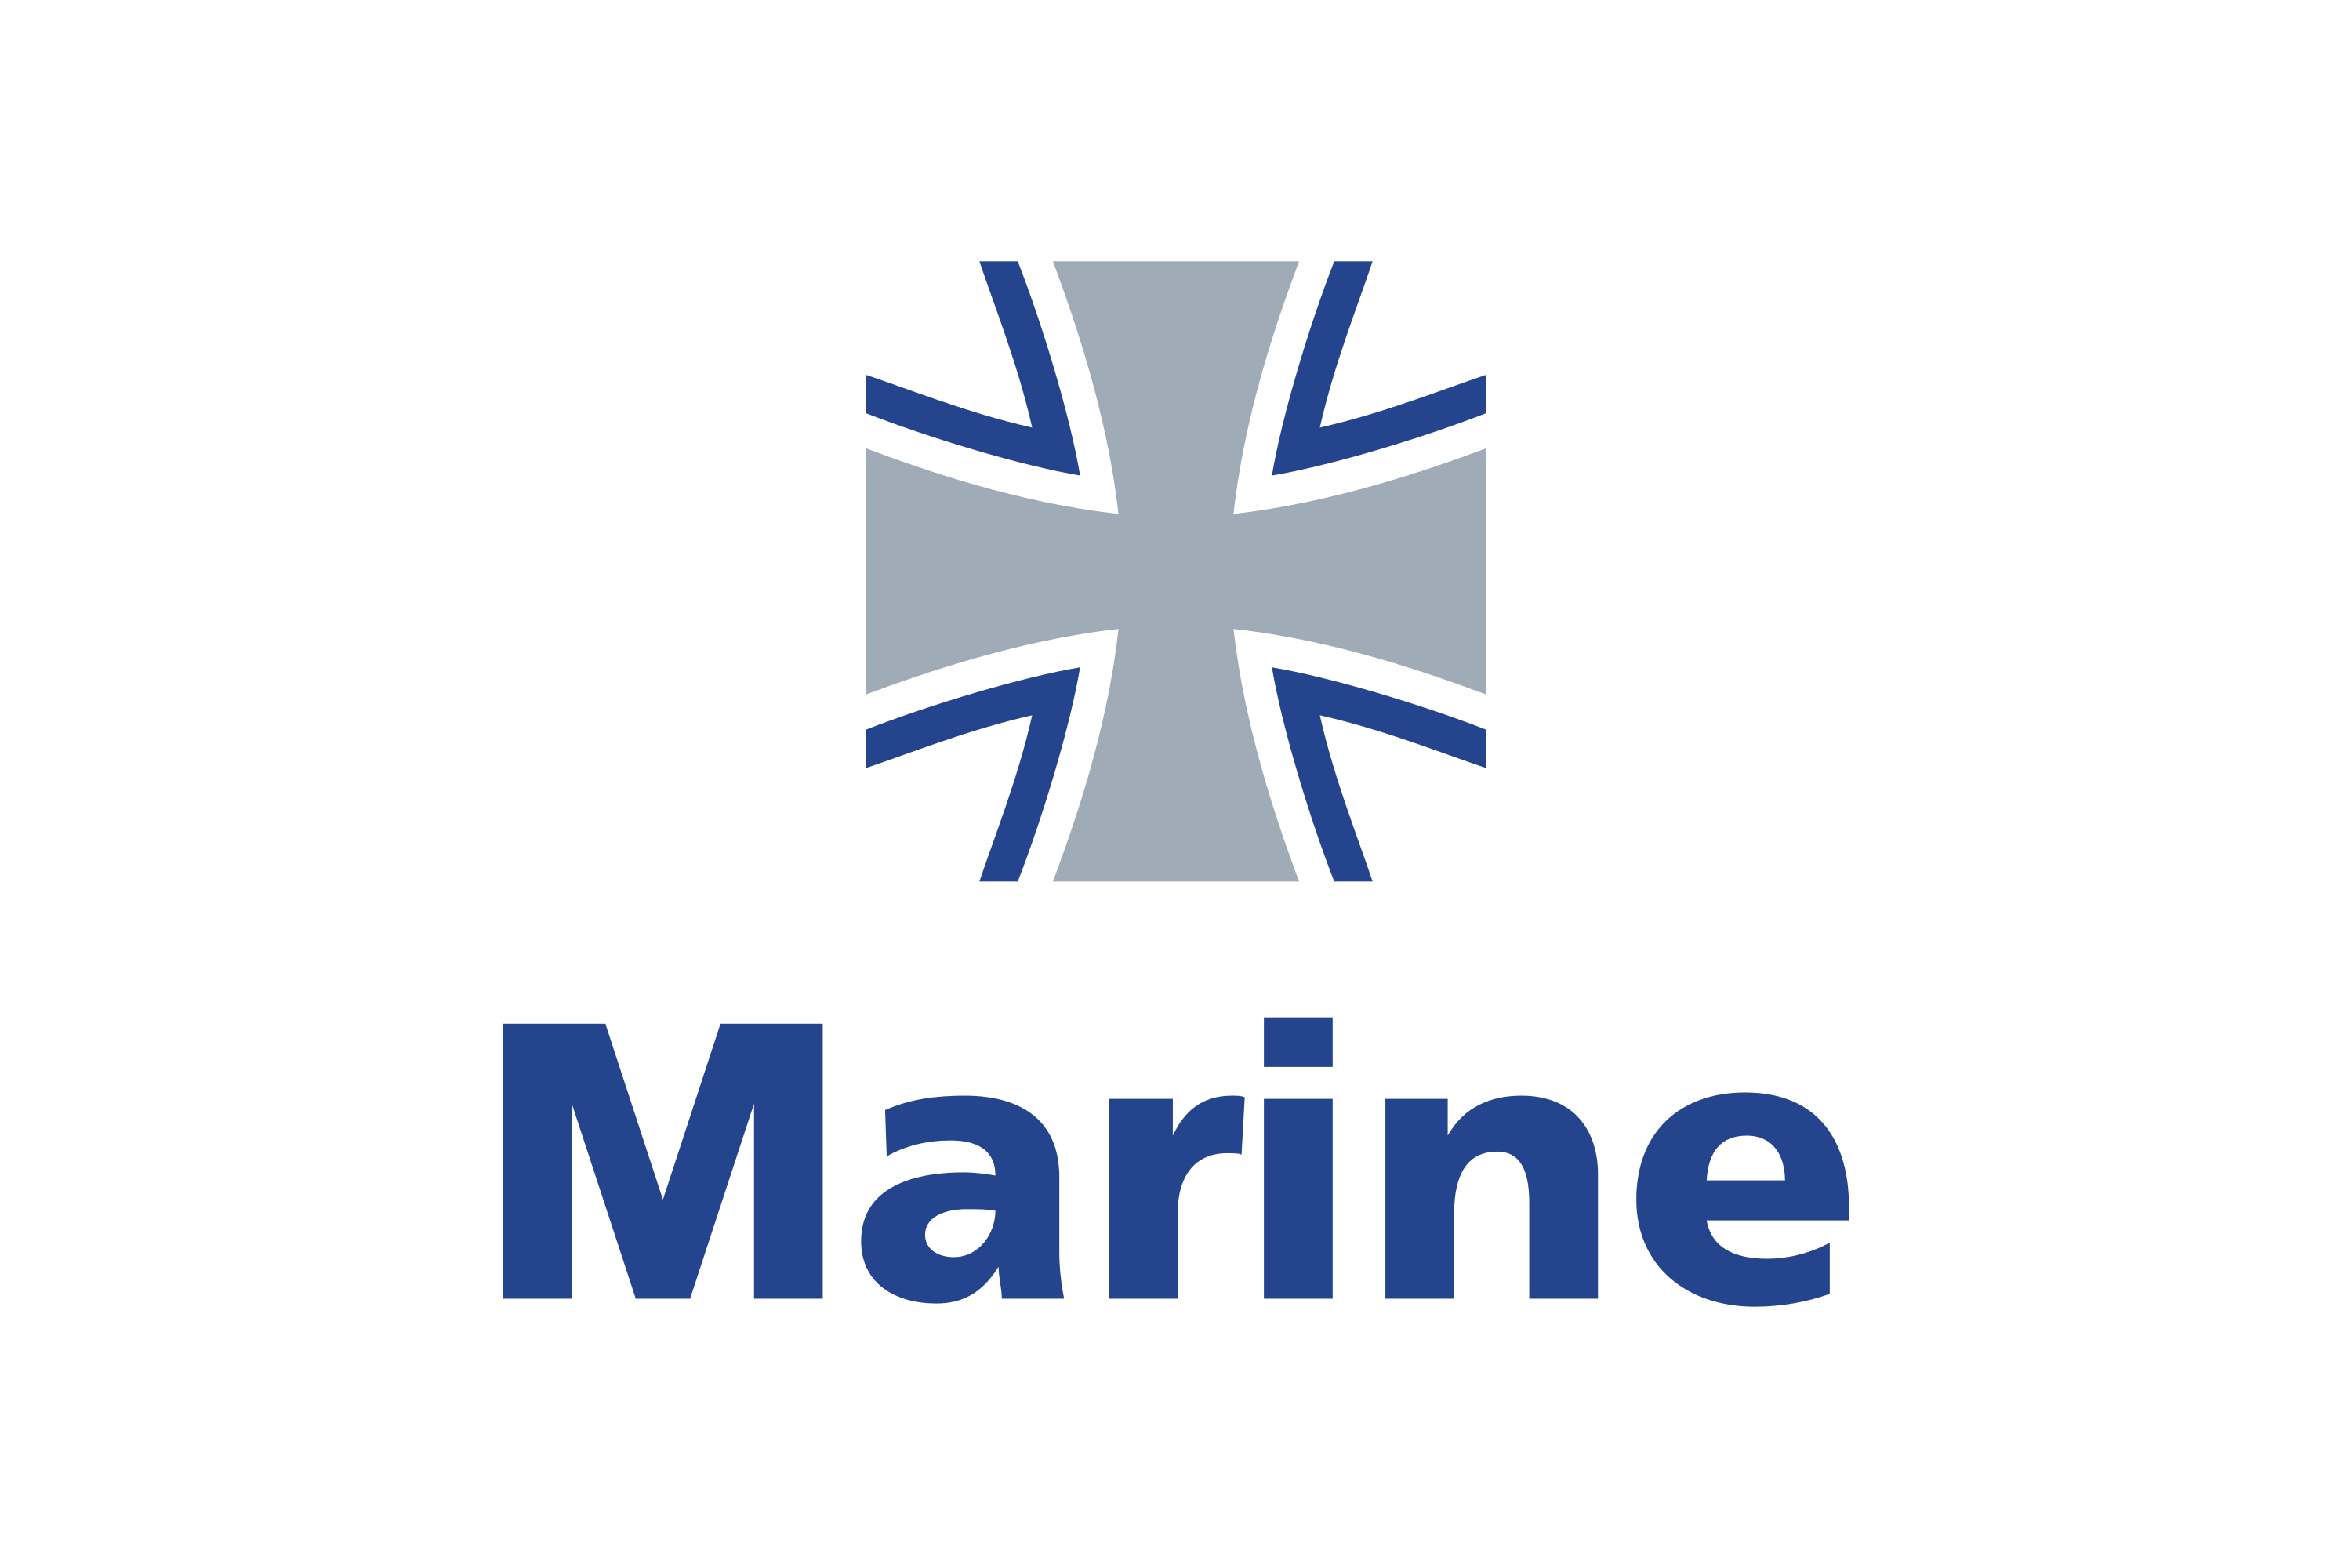 Download German Navy (Deutsche Marine, Marine) Logo in SVG Vector or